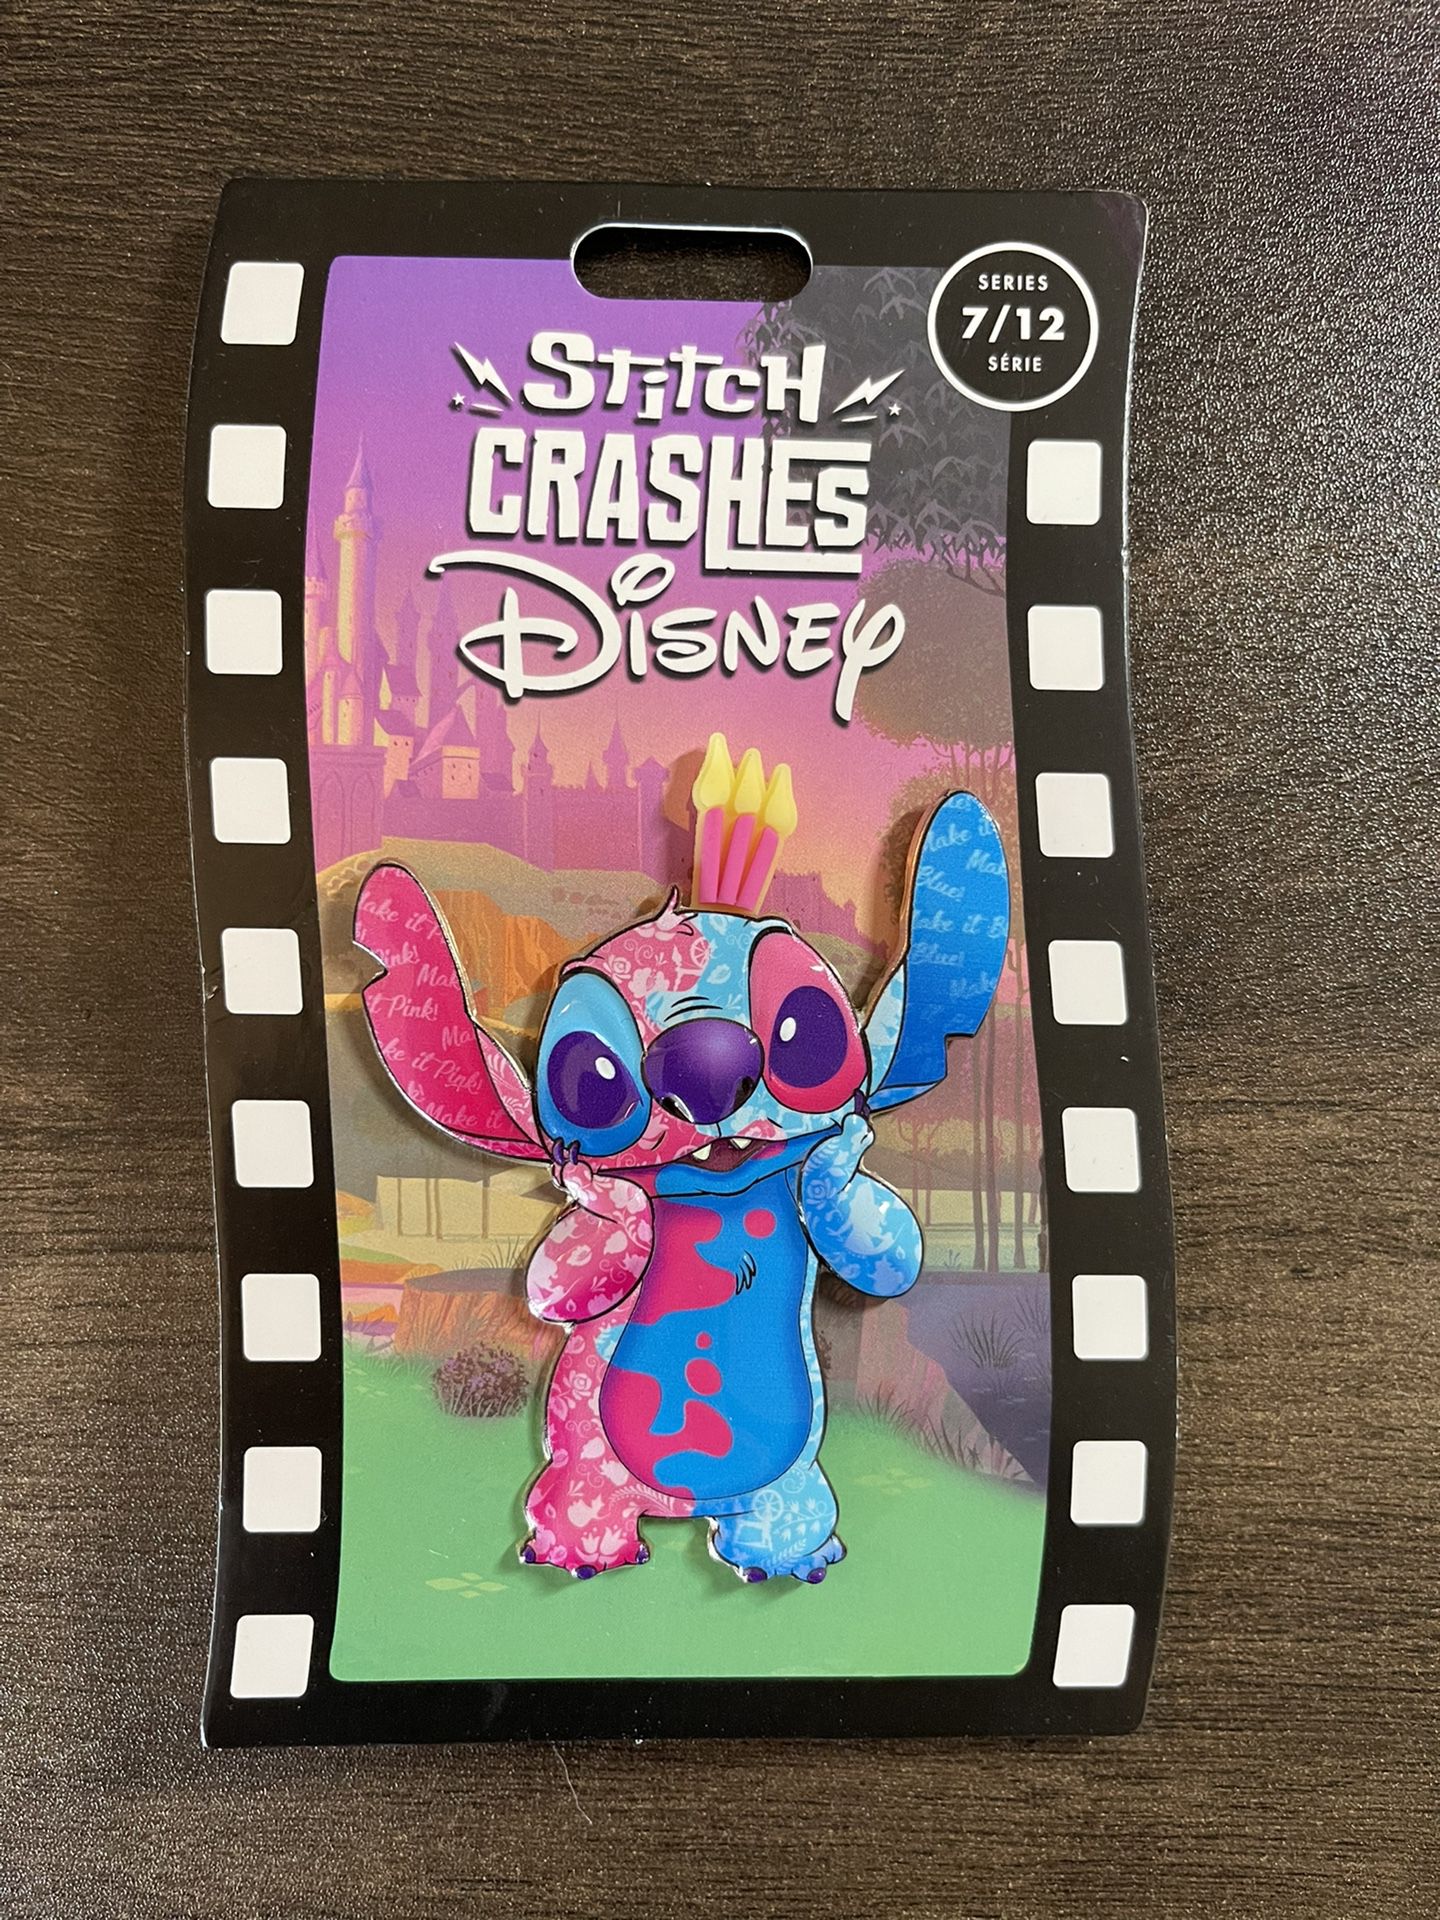 Stitch Crashes Disney Pin - Series 7/12 - Sleeping Beauty